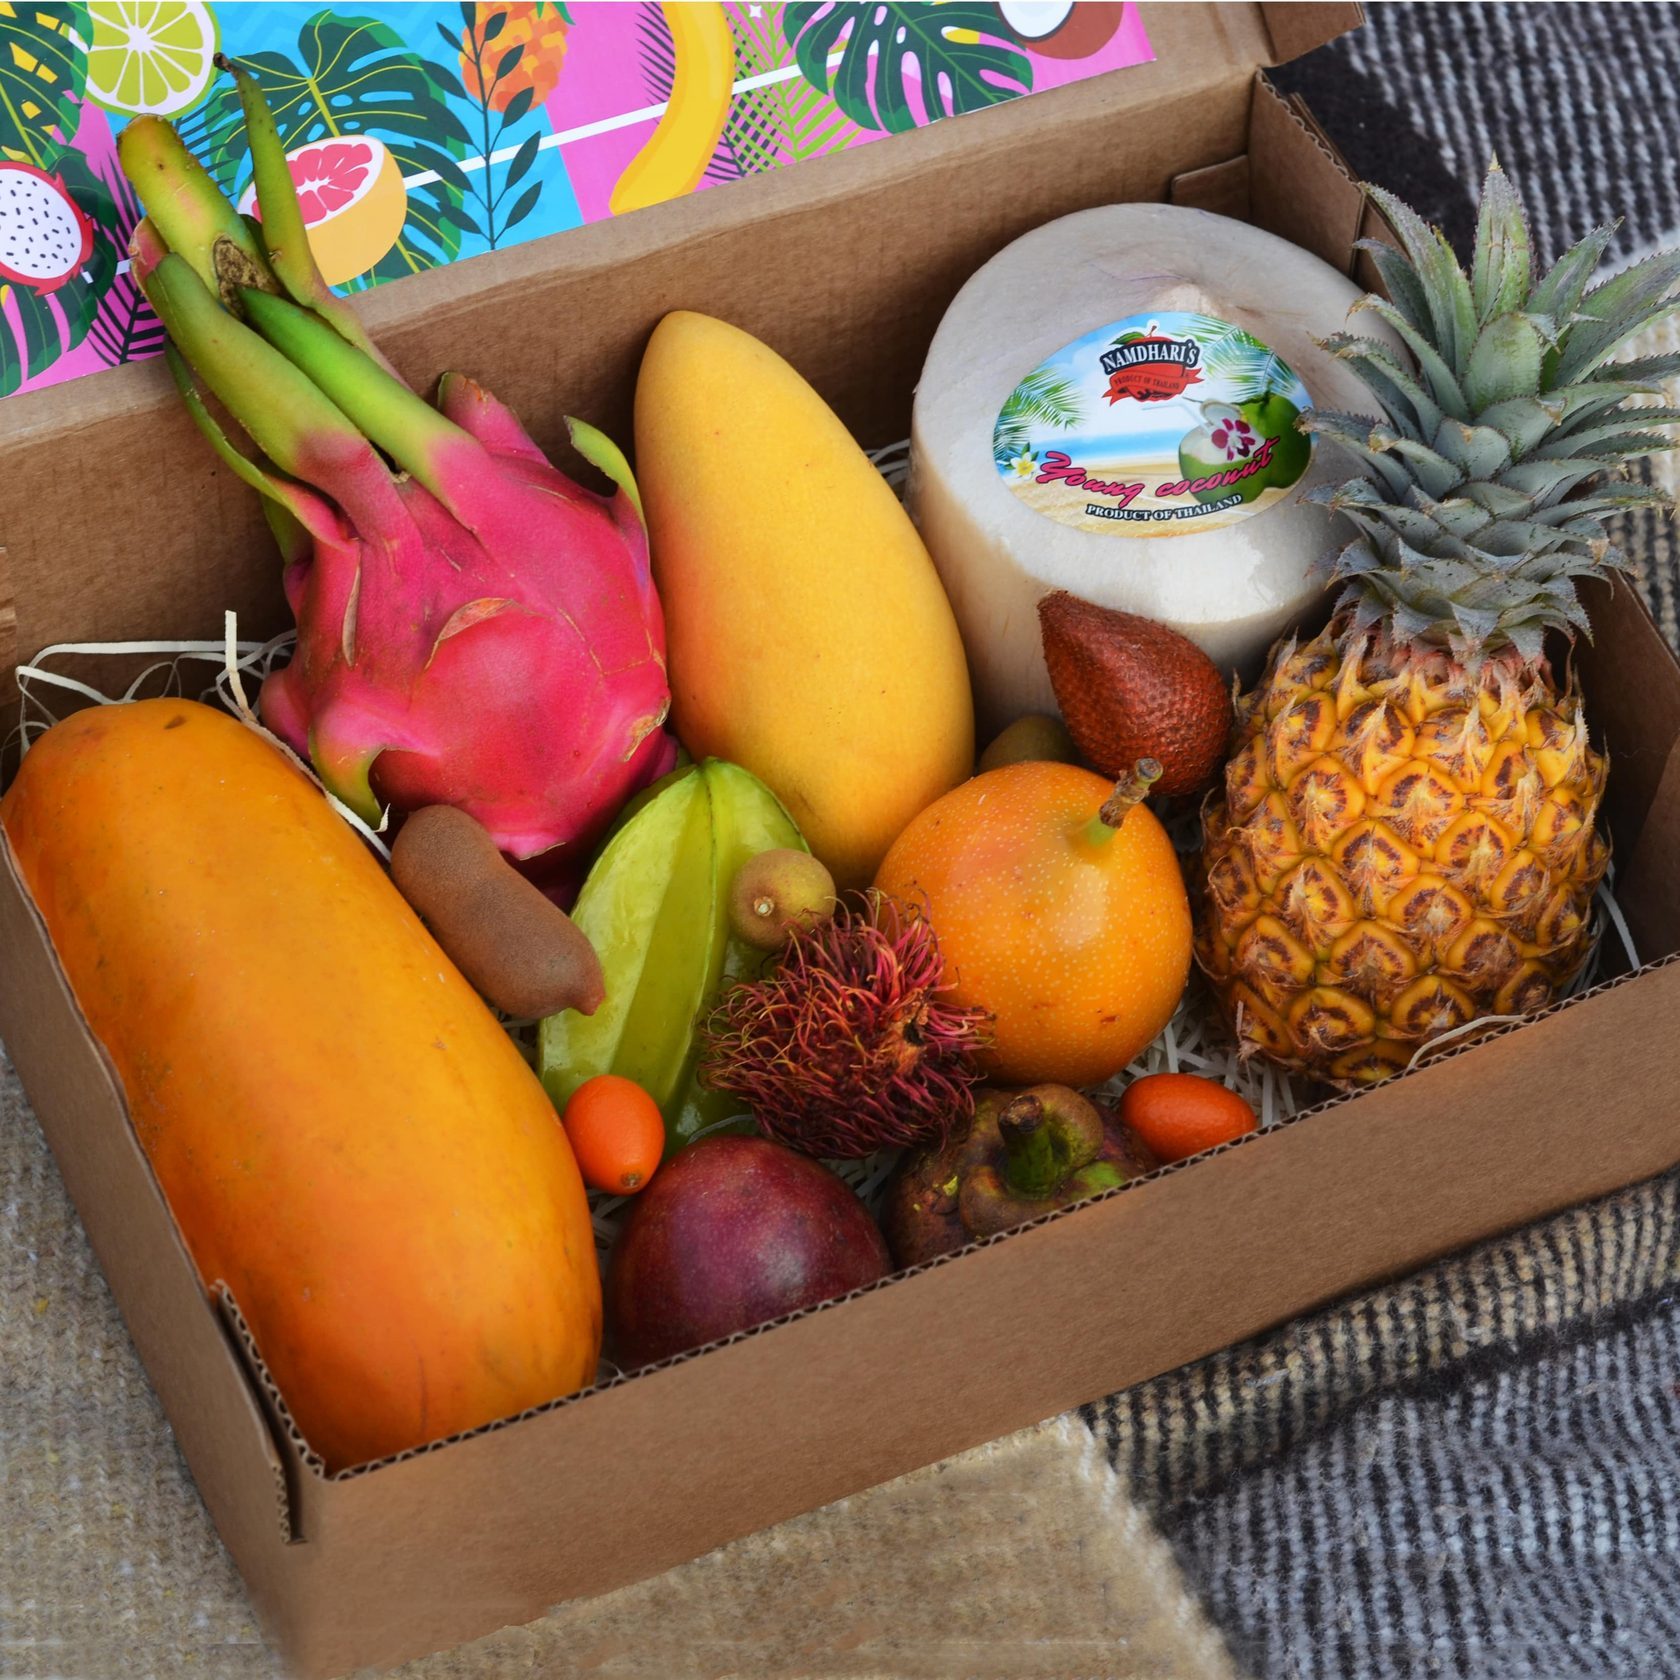 Перевозка фруктов из тайланда. Коробка экзотических фруктов. Ящик с экзотическими фруктами. Коробка с фруктами. Экзотические фрукты в коробке.